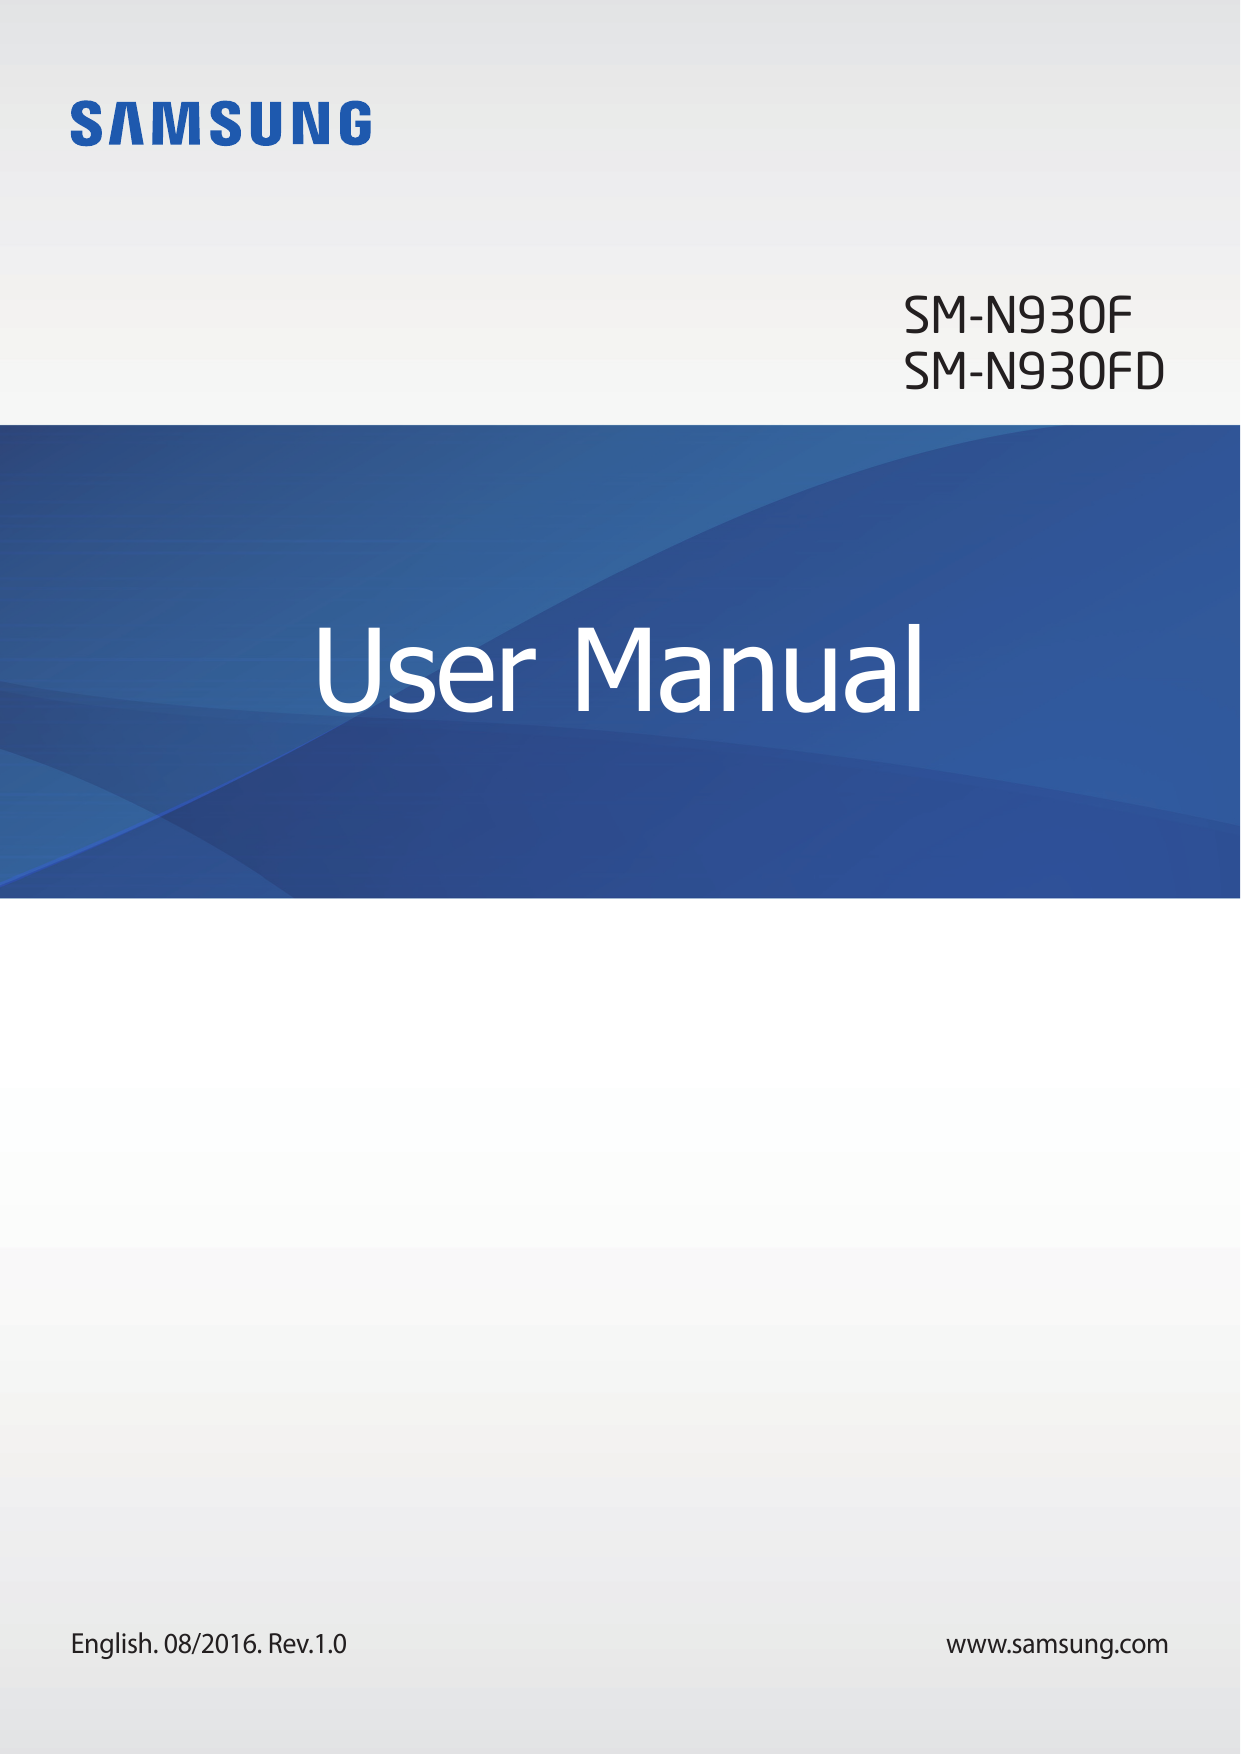 SM-N930FSM-N930FDUser ManualEnglish. 08/2016. Rev.1.0www.samsung.com